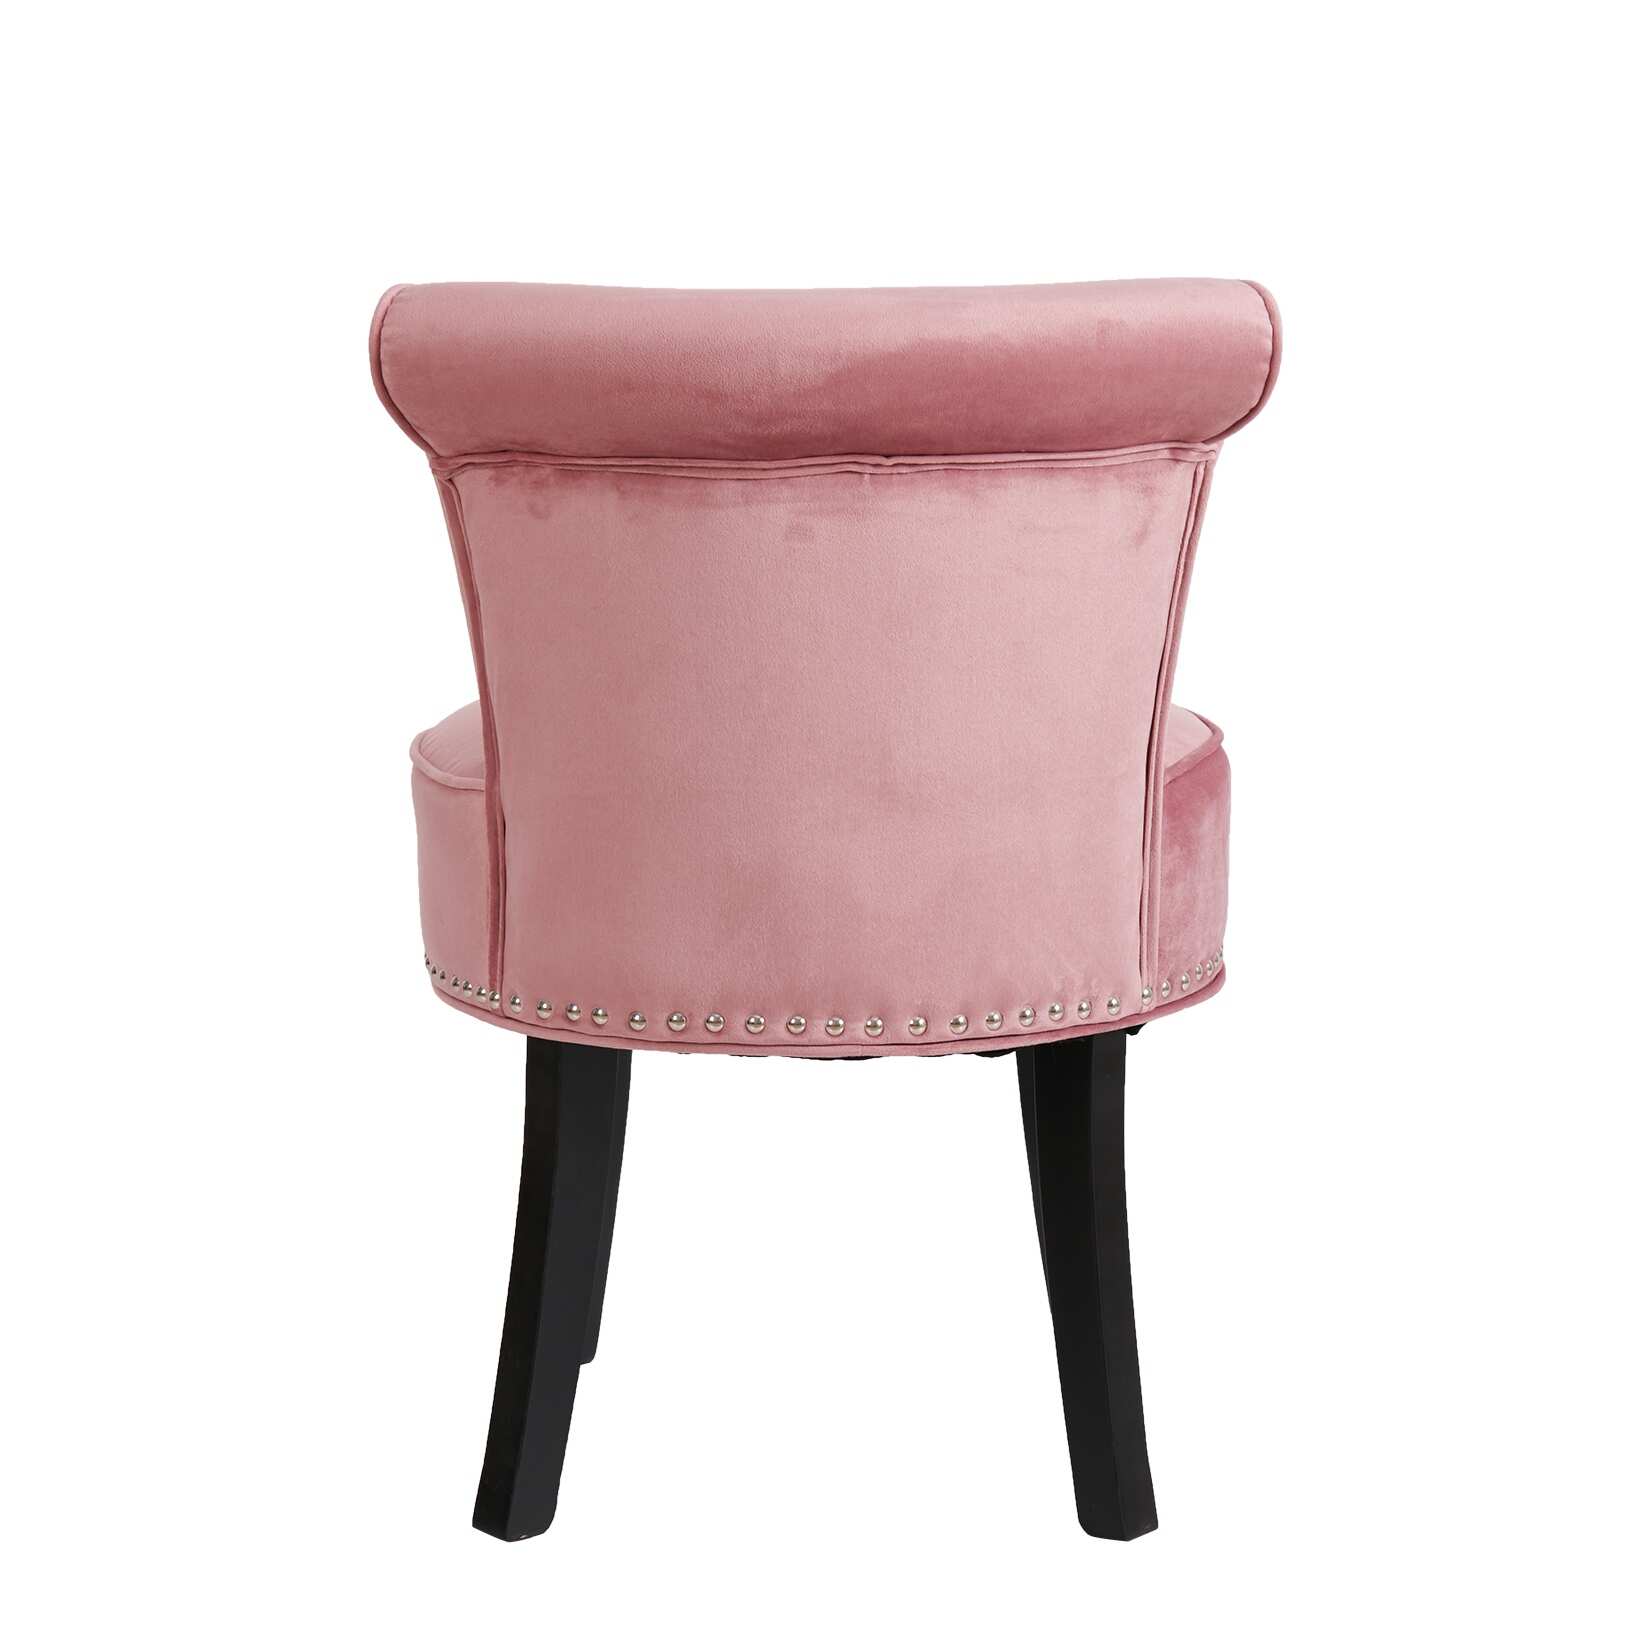 Velvet Tufted Vanity Stool Low Back Makeup Chair - 19" W x 27.5" H